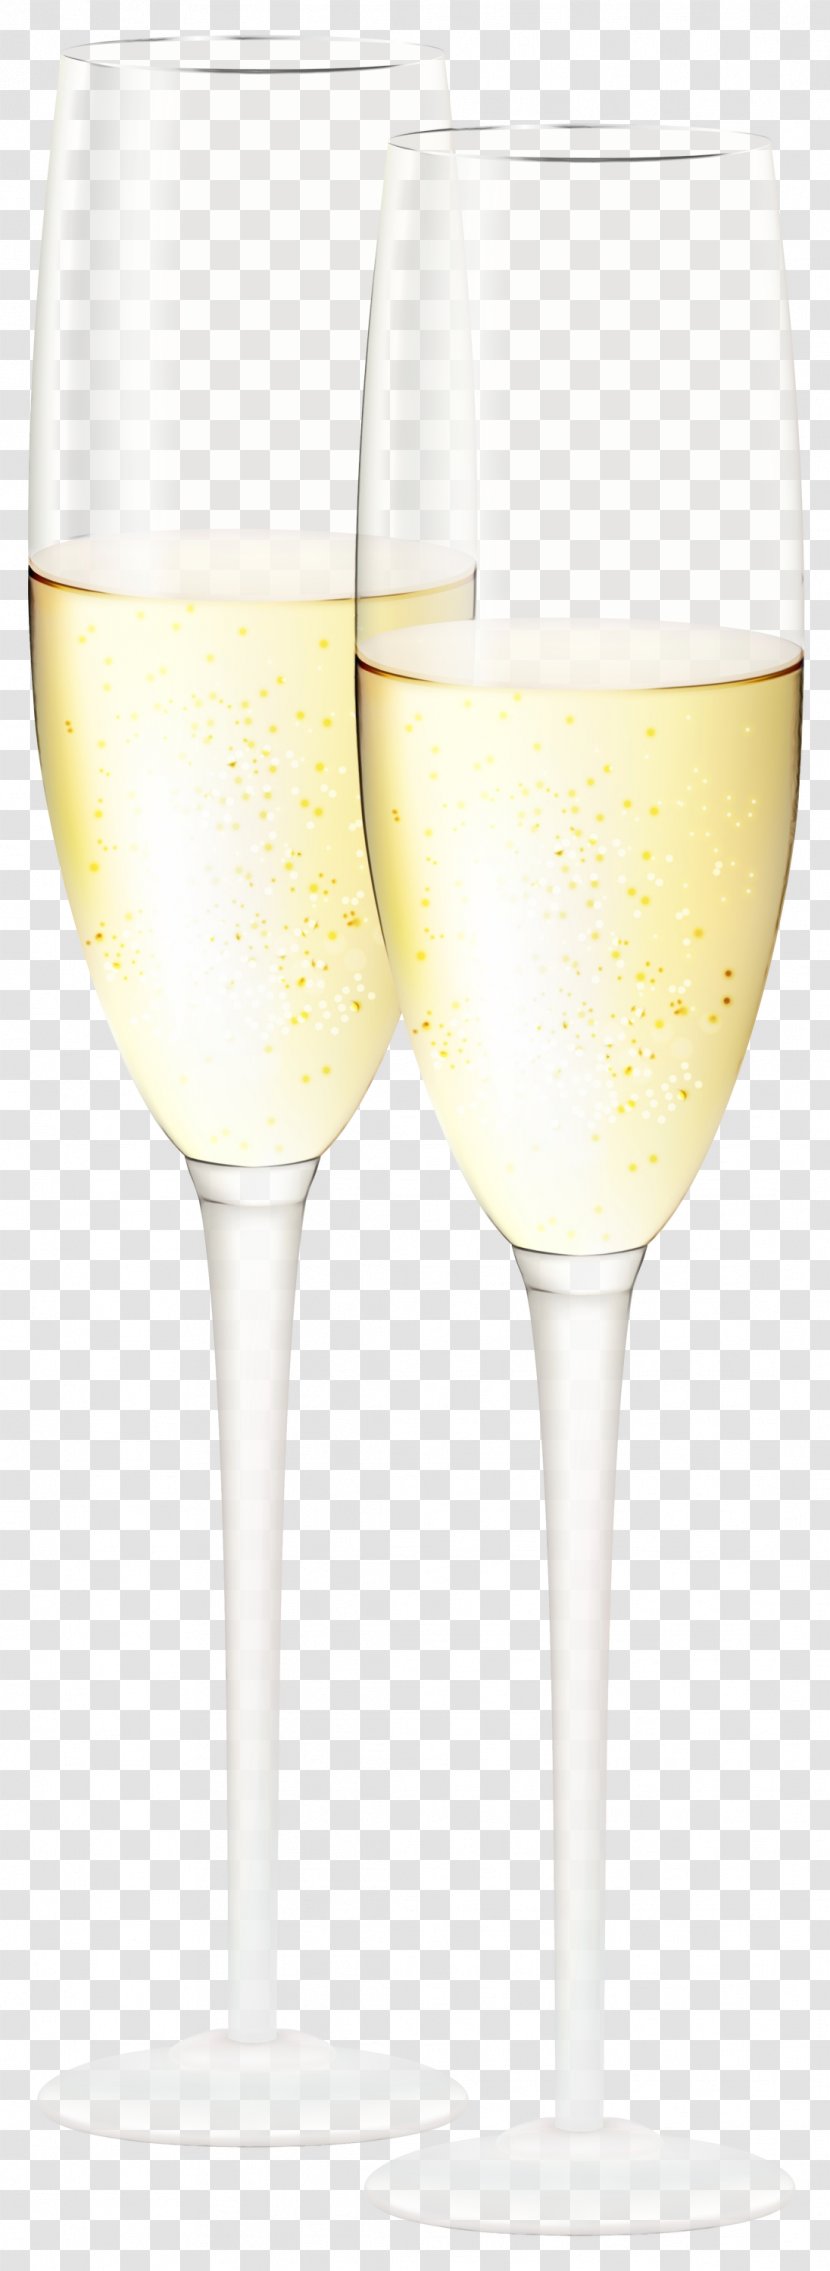 Champagne Glasses Background - Alcoholic Beverage - Dessert Wine Cocktail Transparent PNG